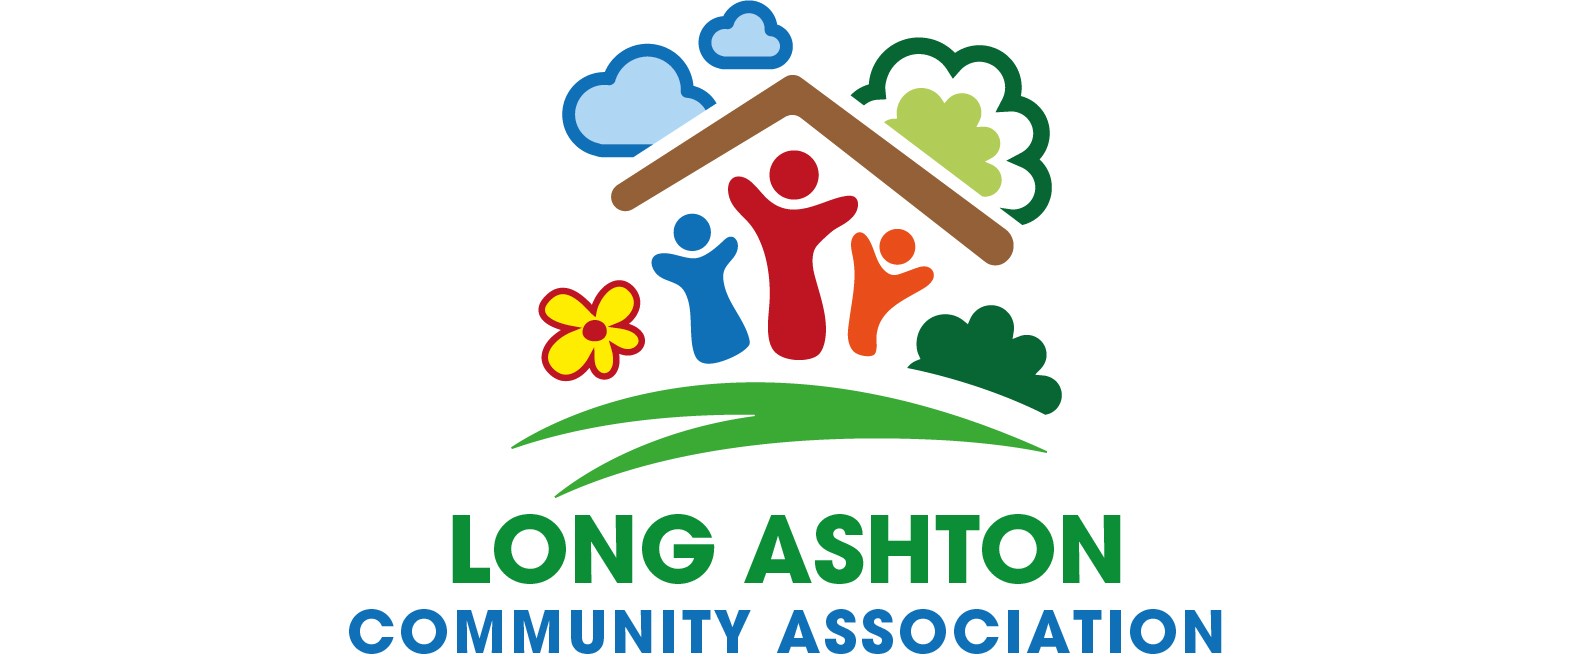 Long Ashton Community Association